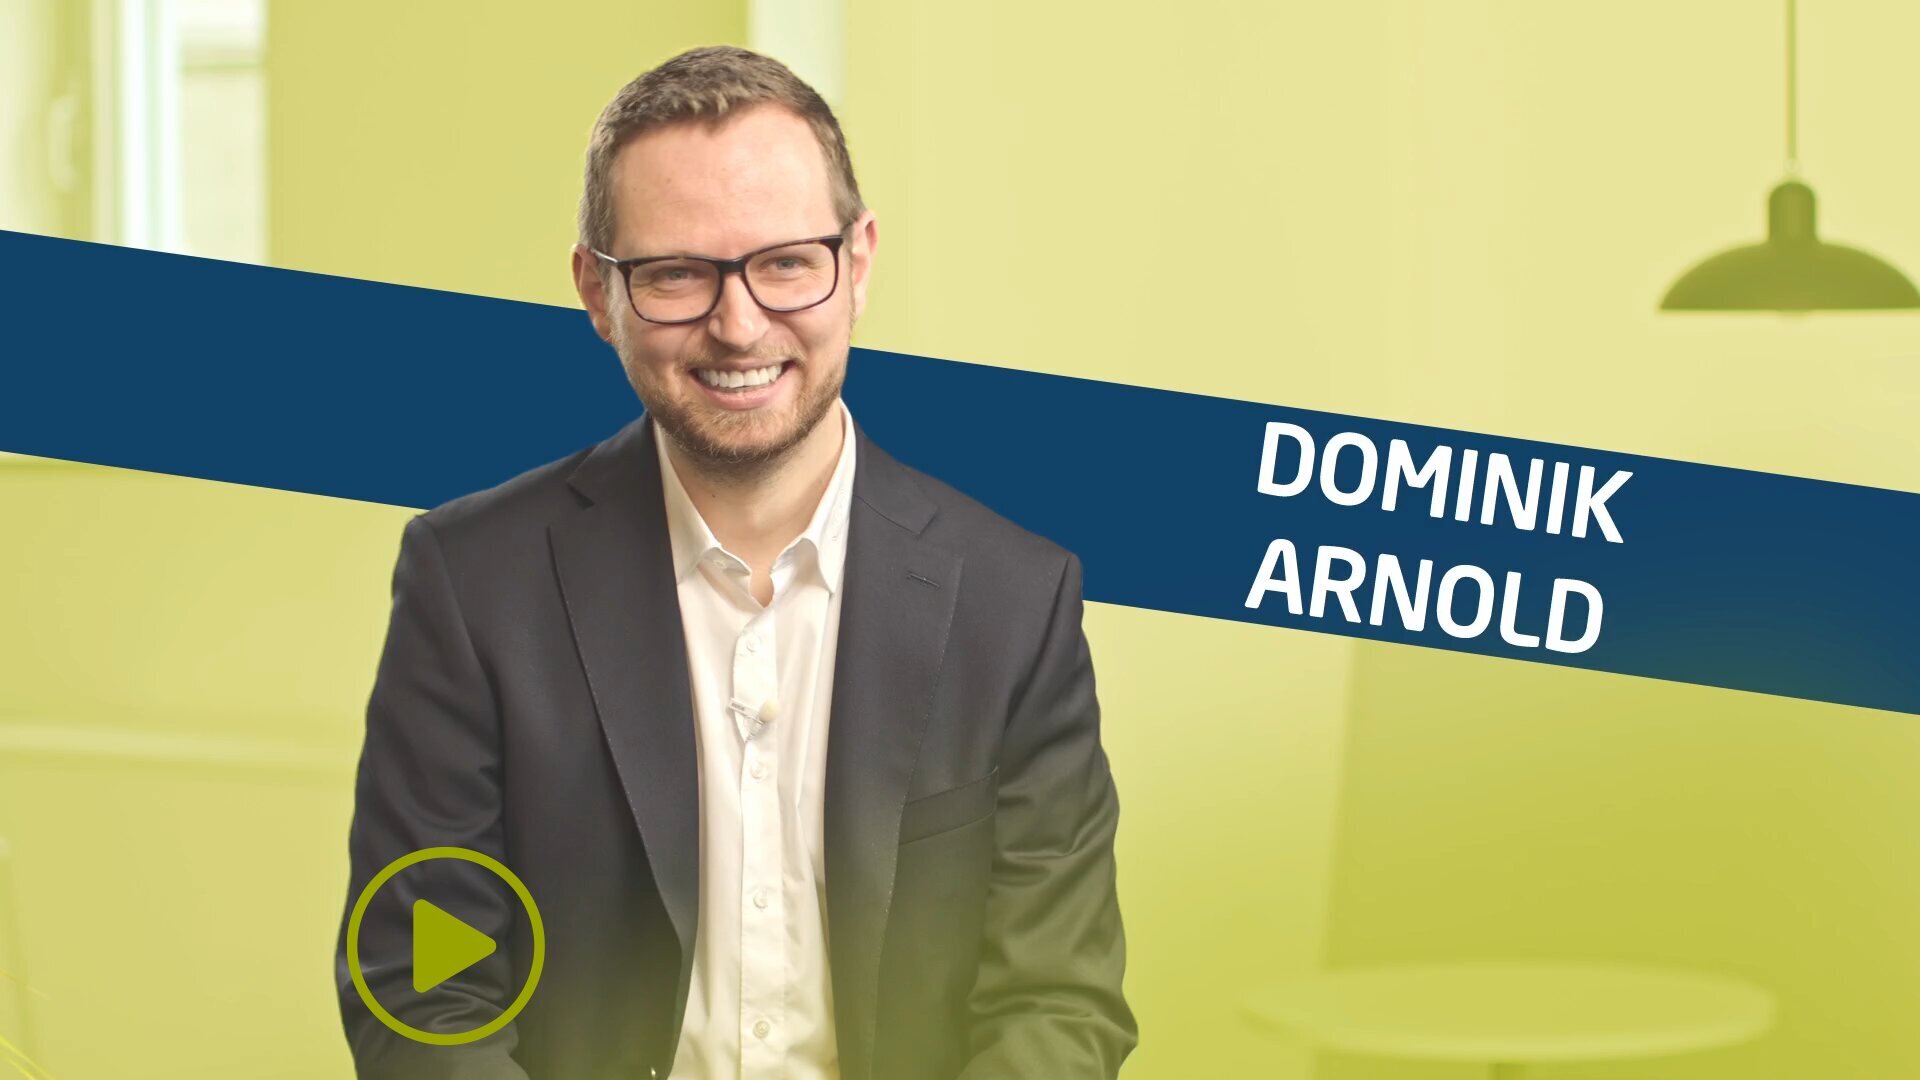  Dominik Denk, a Global Graduate Trainee Program graduate talks about his experience in a video